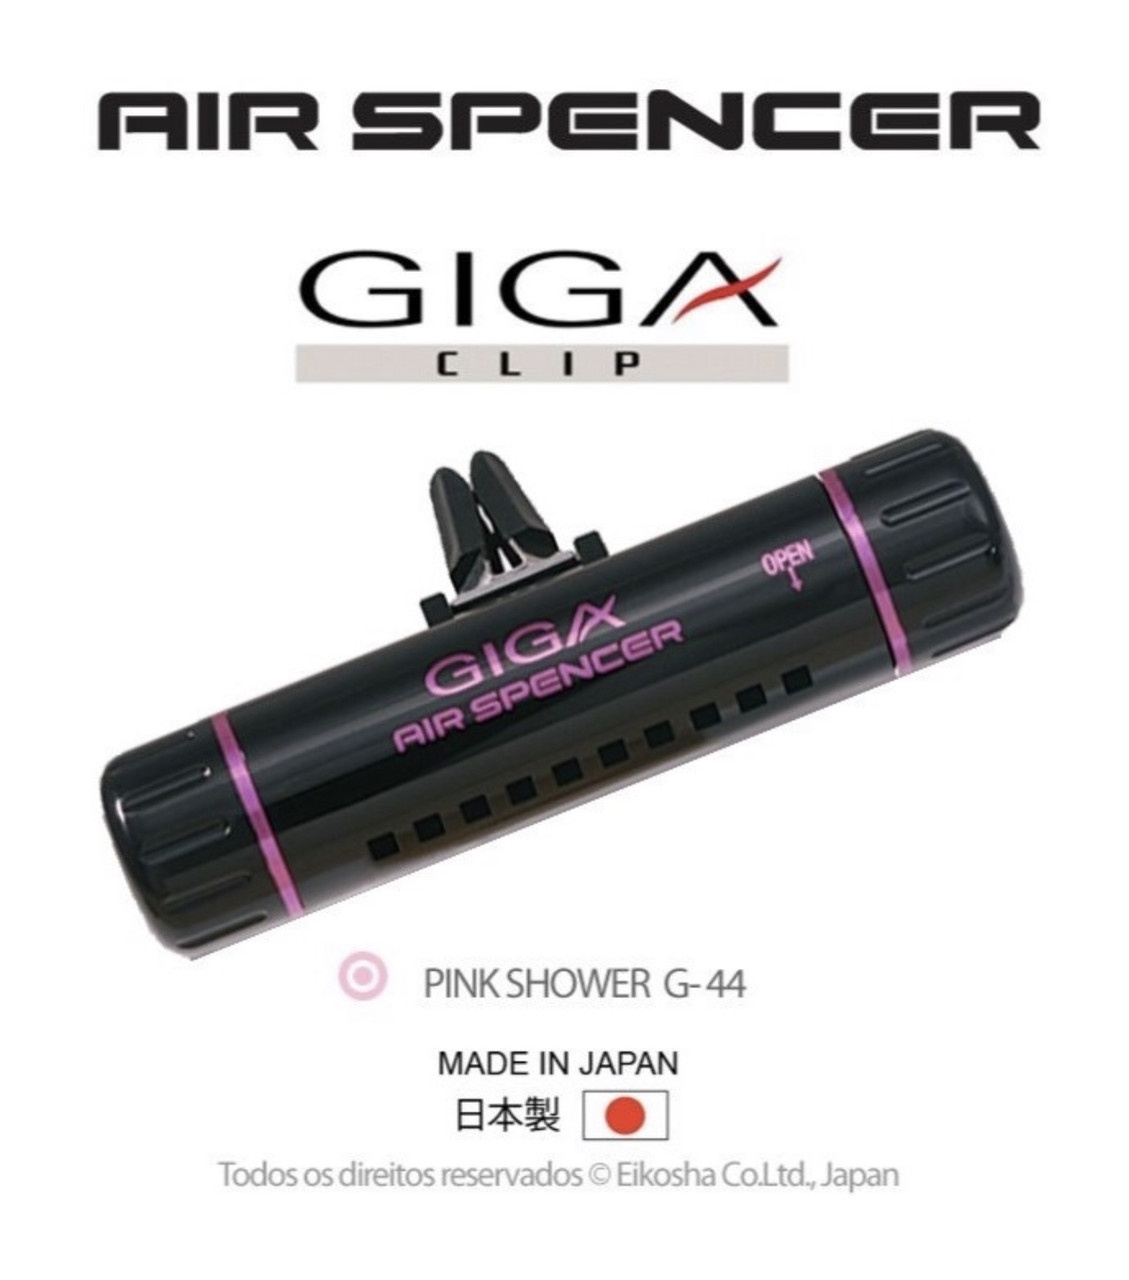 EIKOSHA AIR SPENCER GIGA CLIP Pink Shower/Розовый дождь